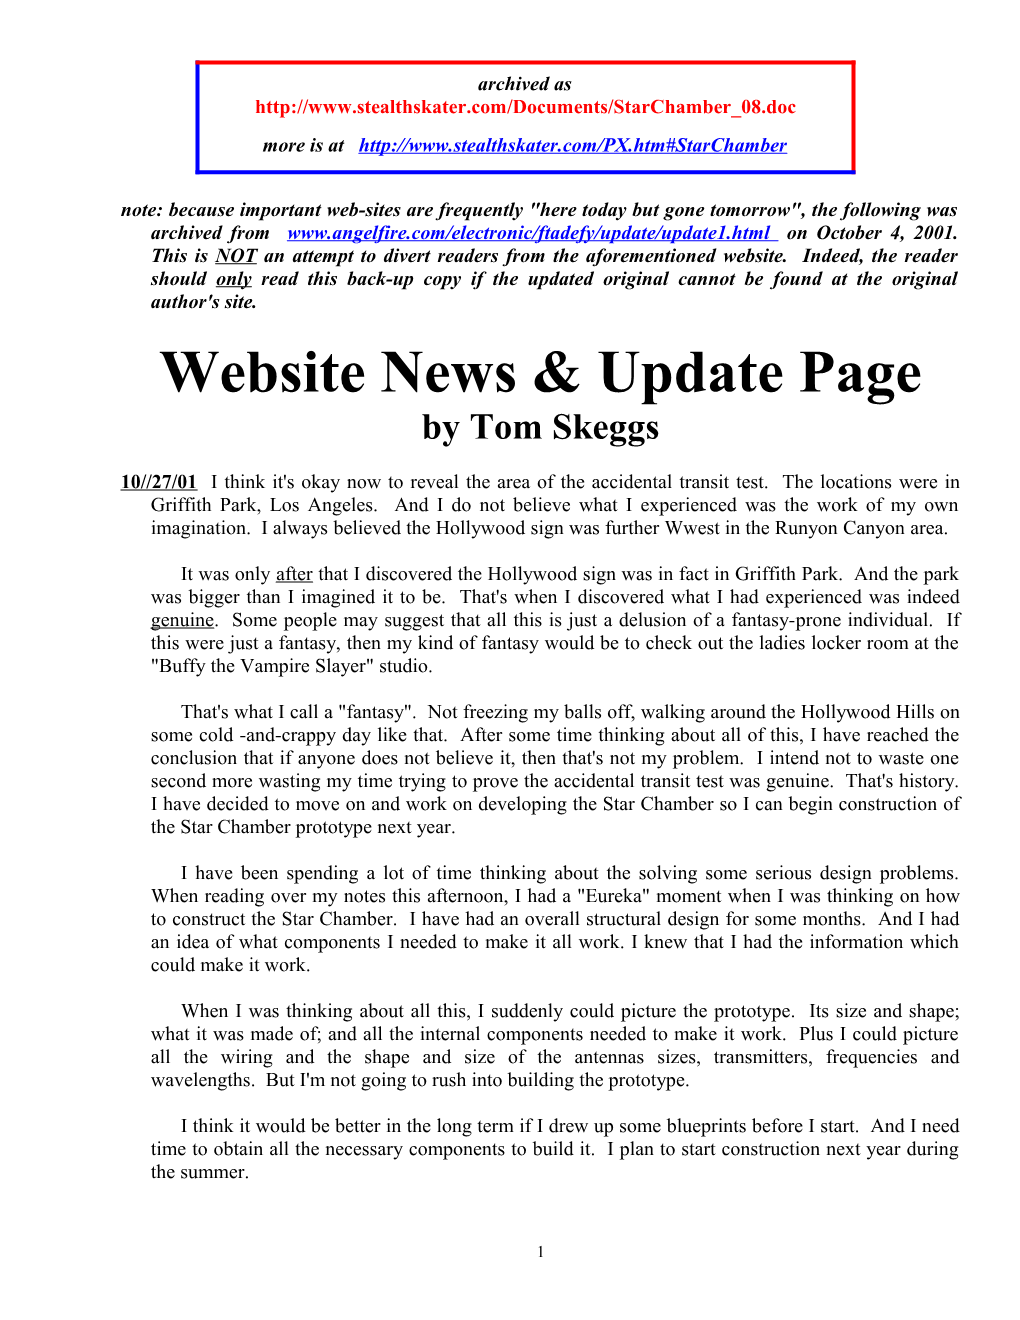 Website News & Update Page